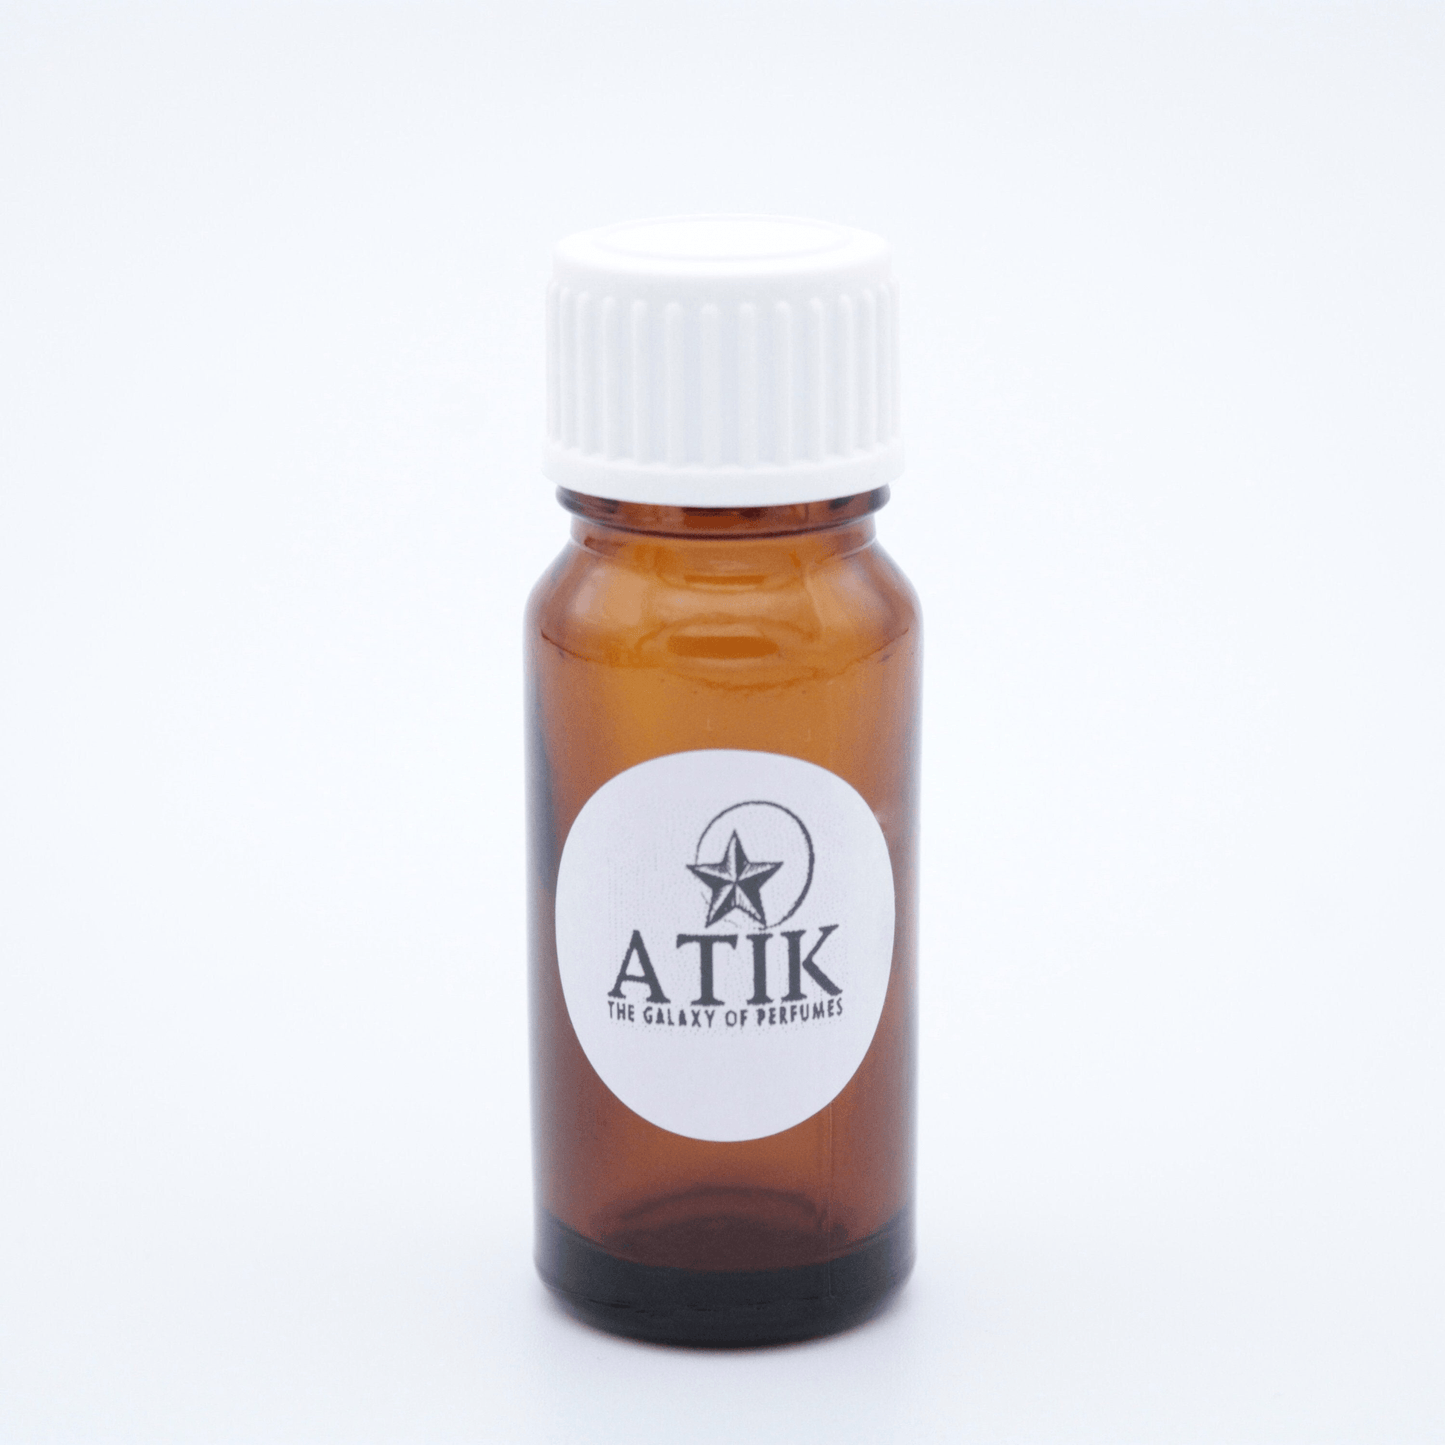 CKI Fragrance Oil - Atik Perfumes